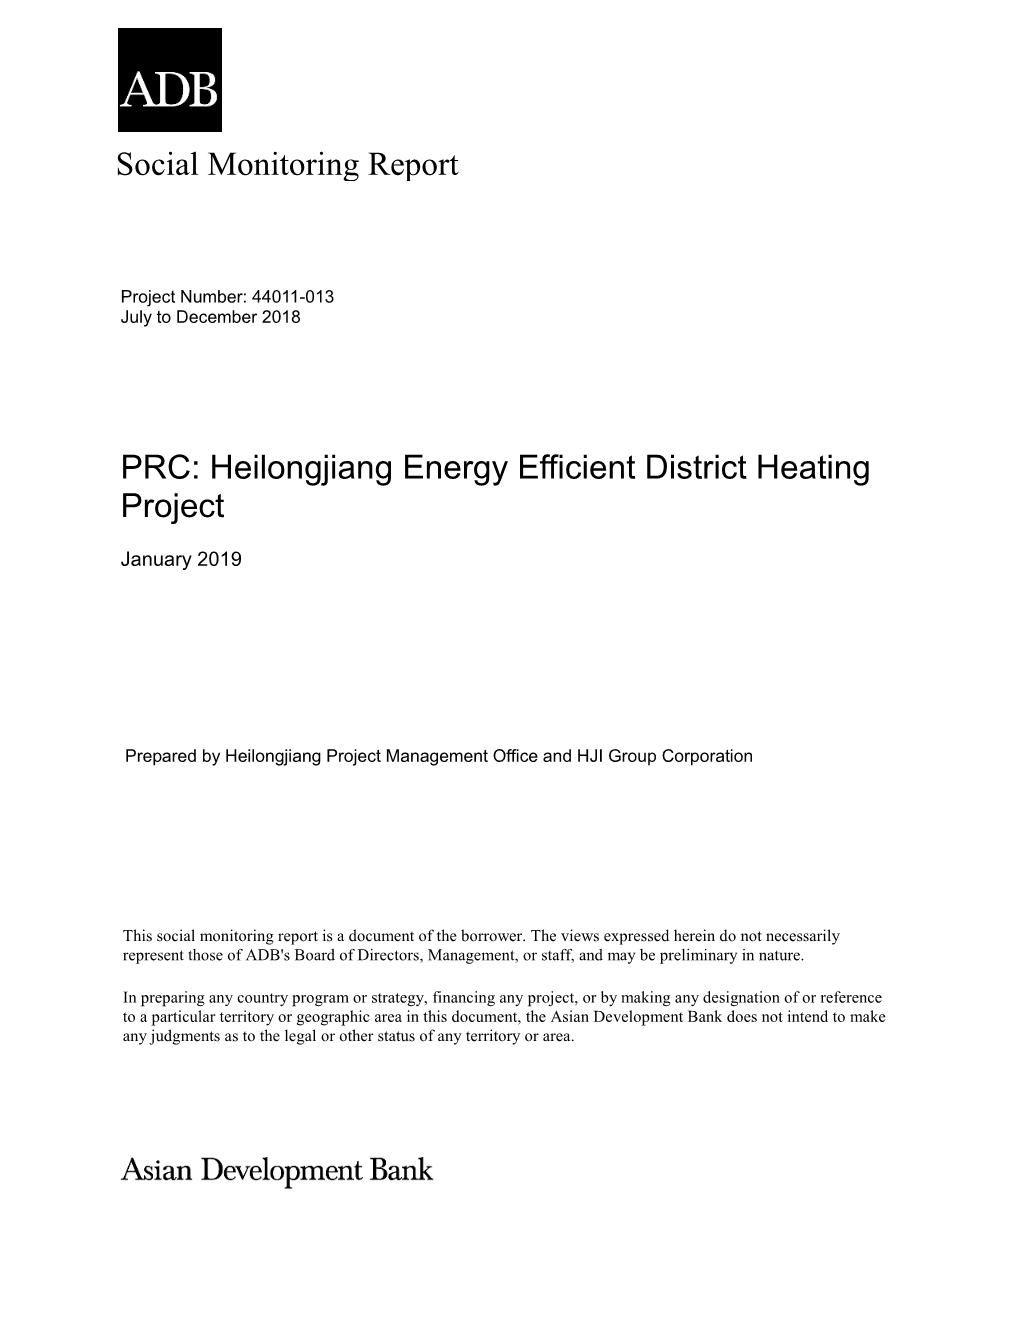 44011-013: Heilongjiang Energy Efficient District Heating Project